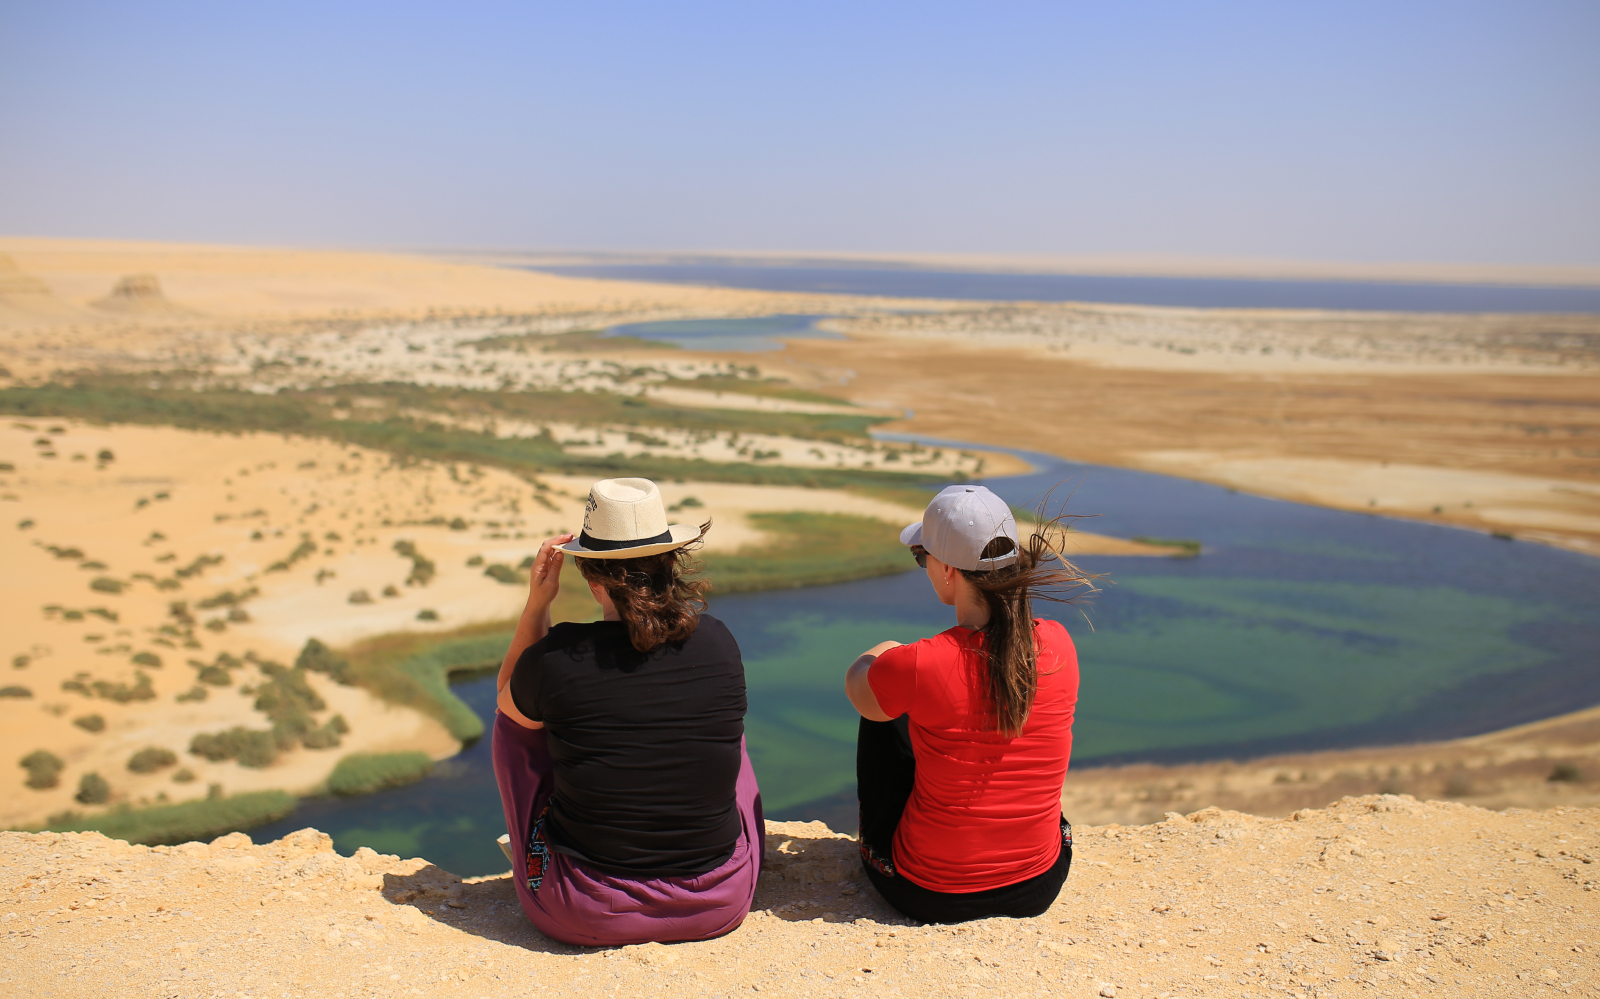 Image of 4x4 Desert Safari with Sandboarding & Camel Ride Tour from Cairo